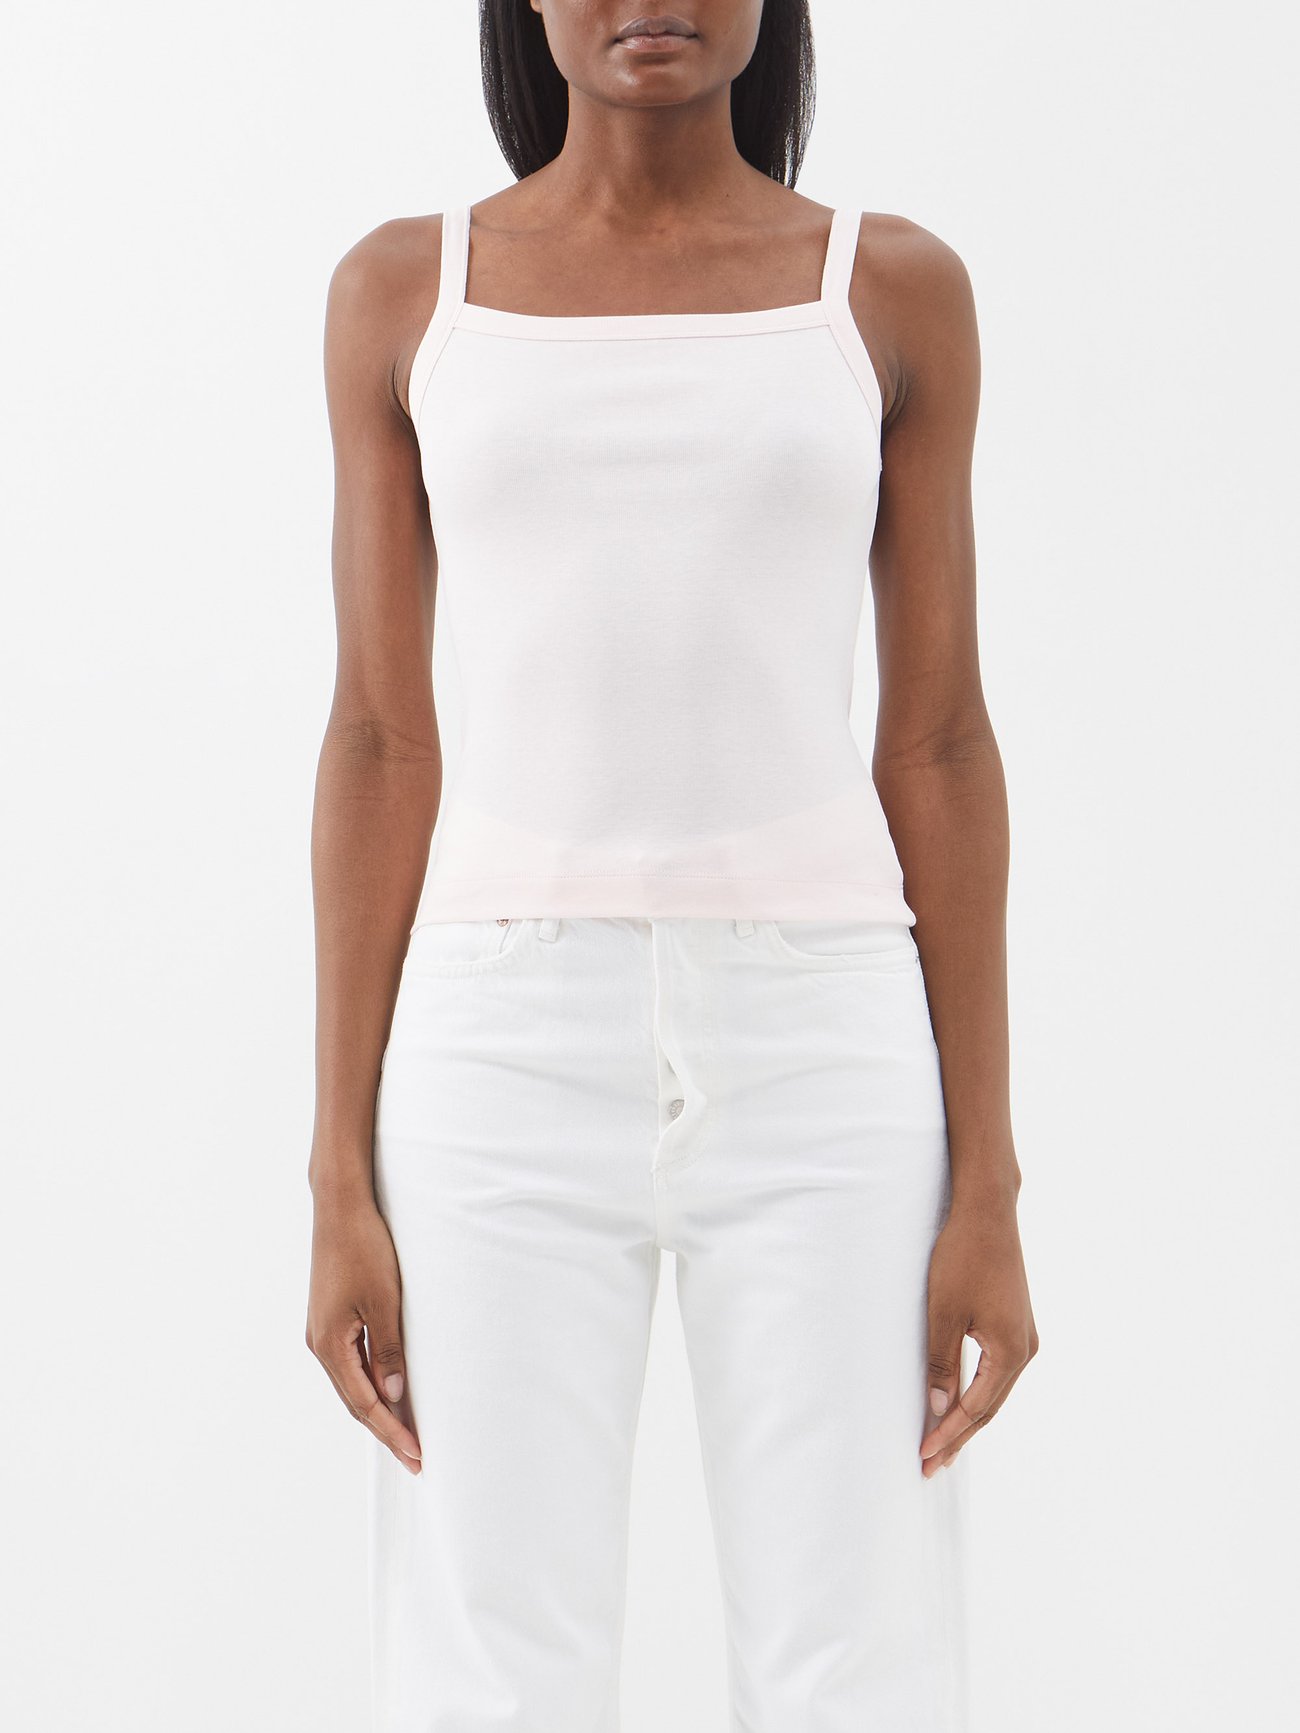 Floret Women's Cotton Long Camisole 1417 – Online Shopping site in